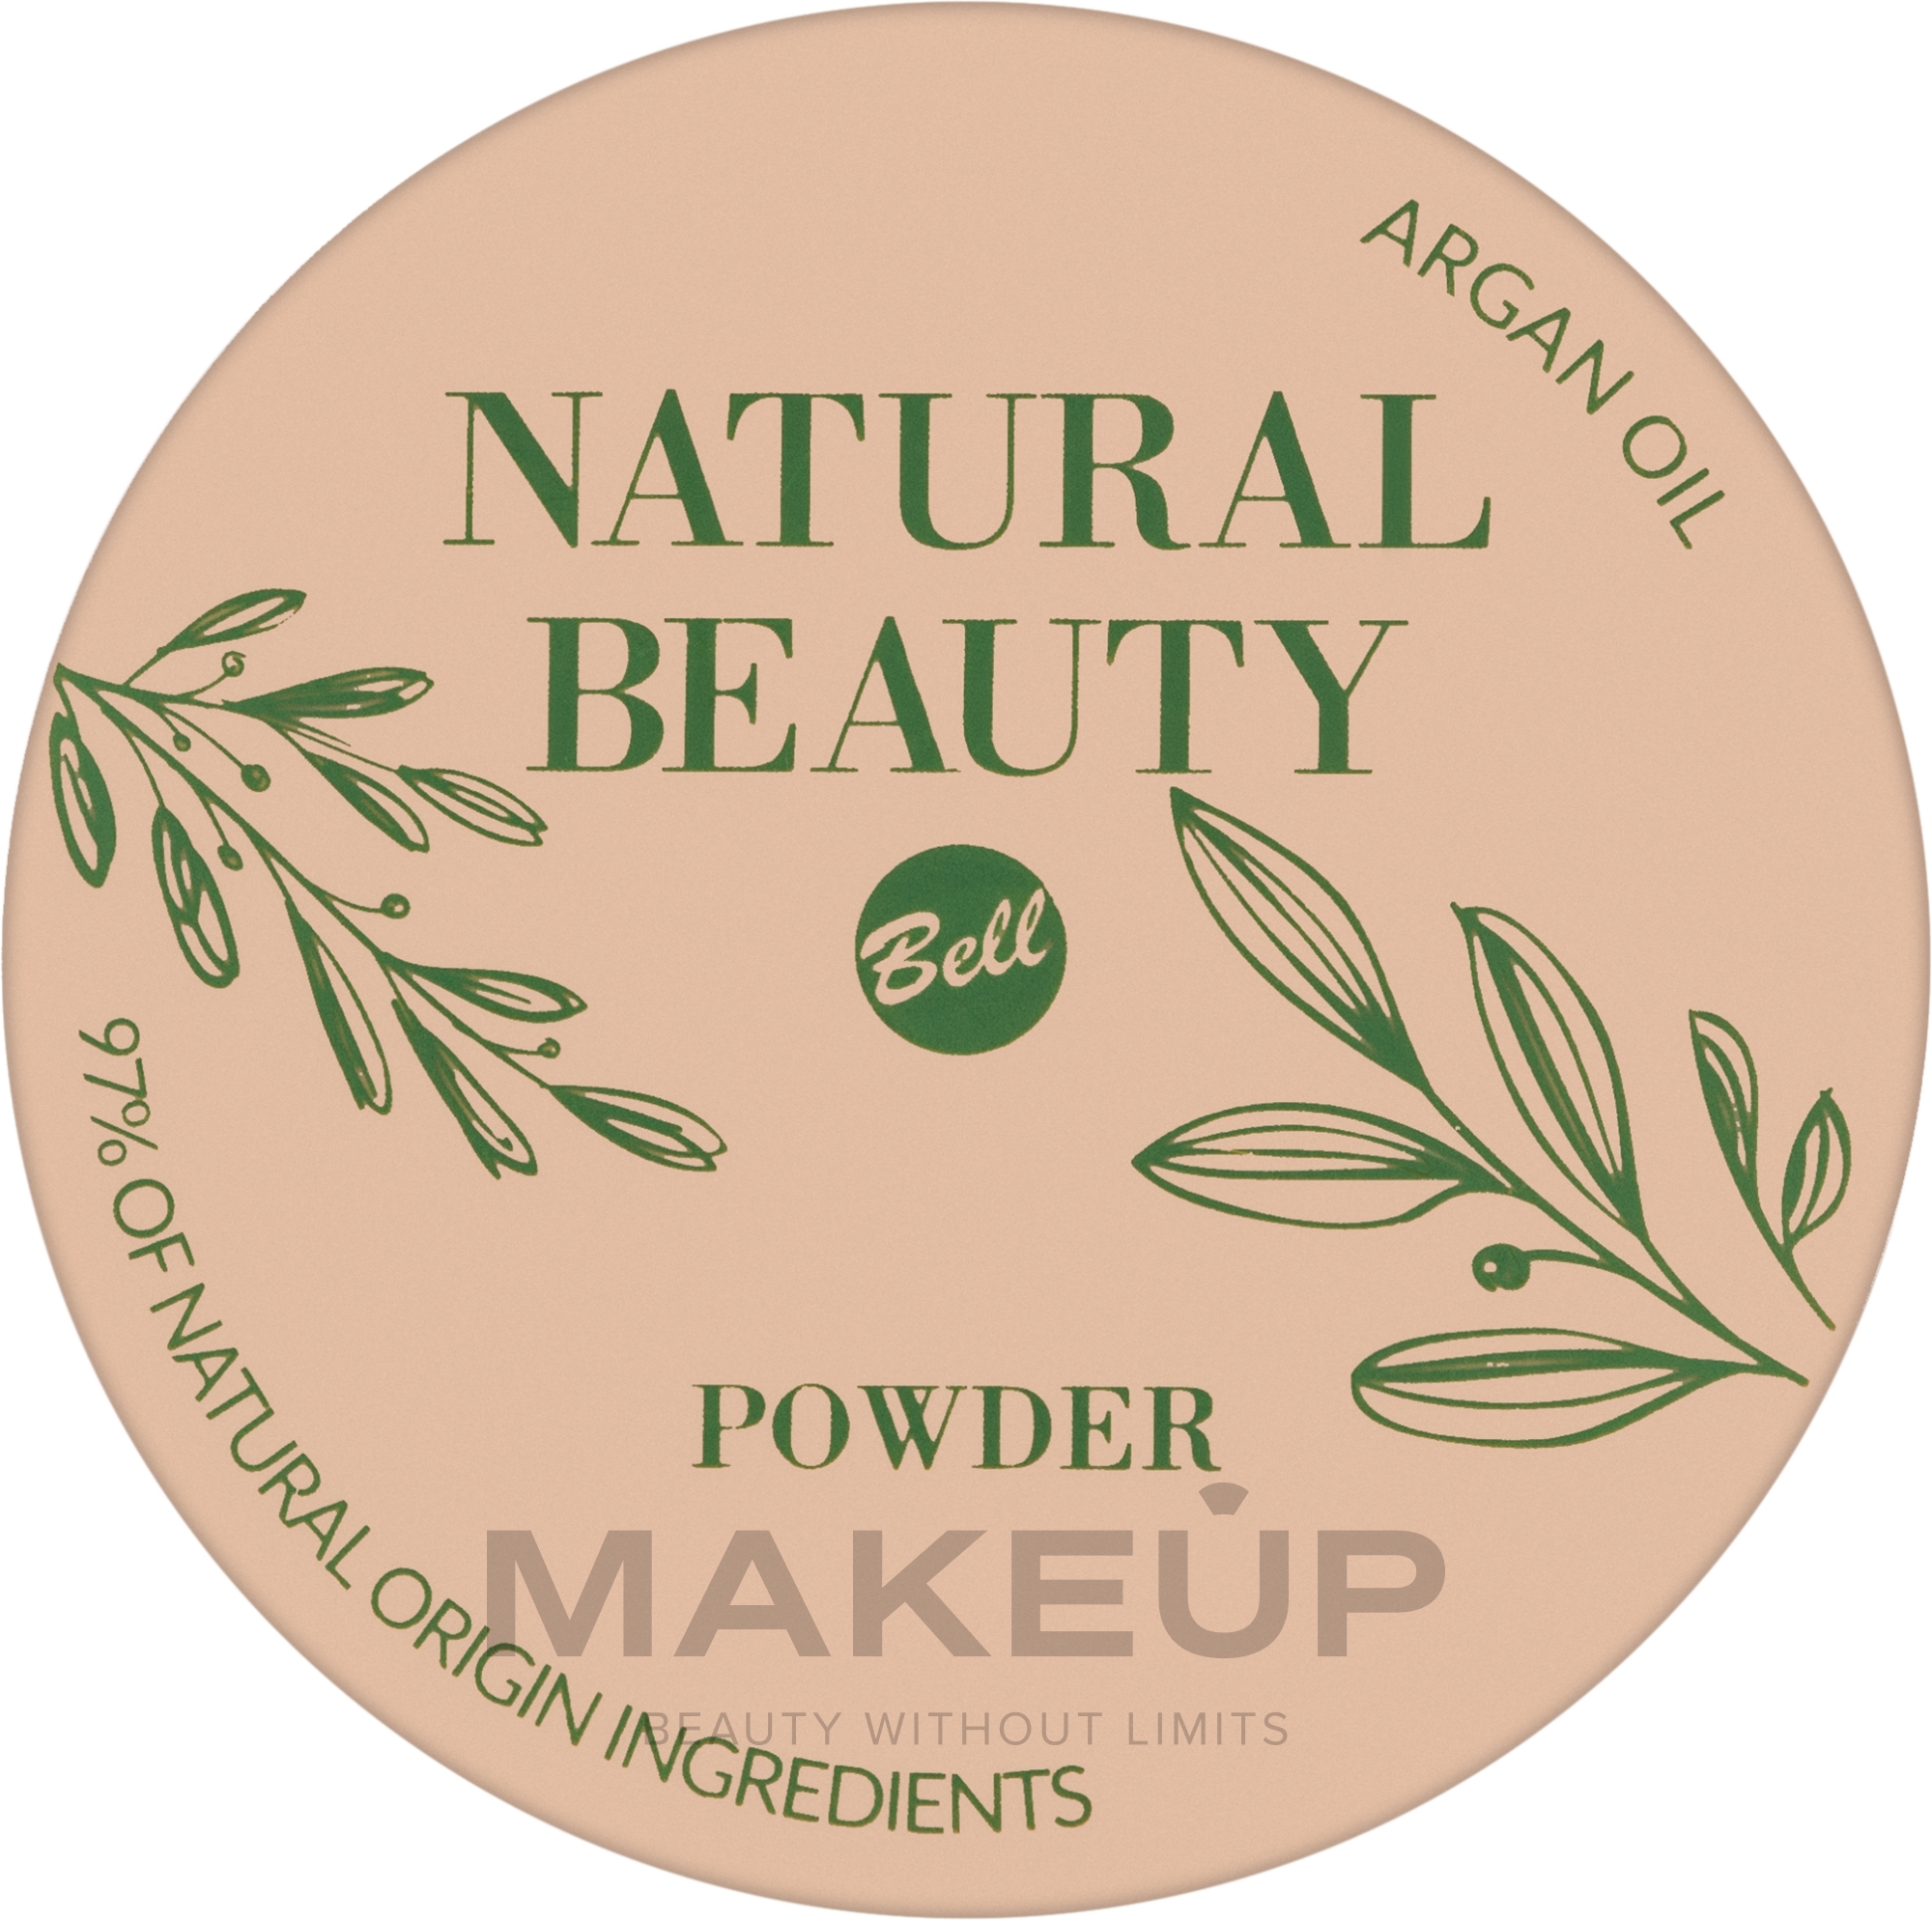 Bell Natural Beauty Powder